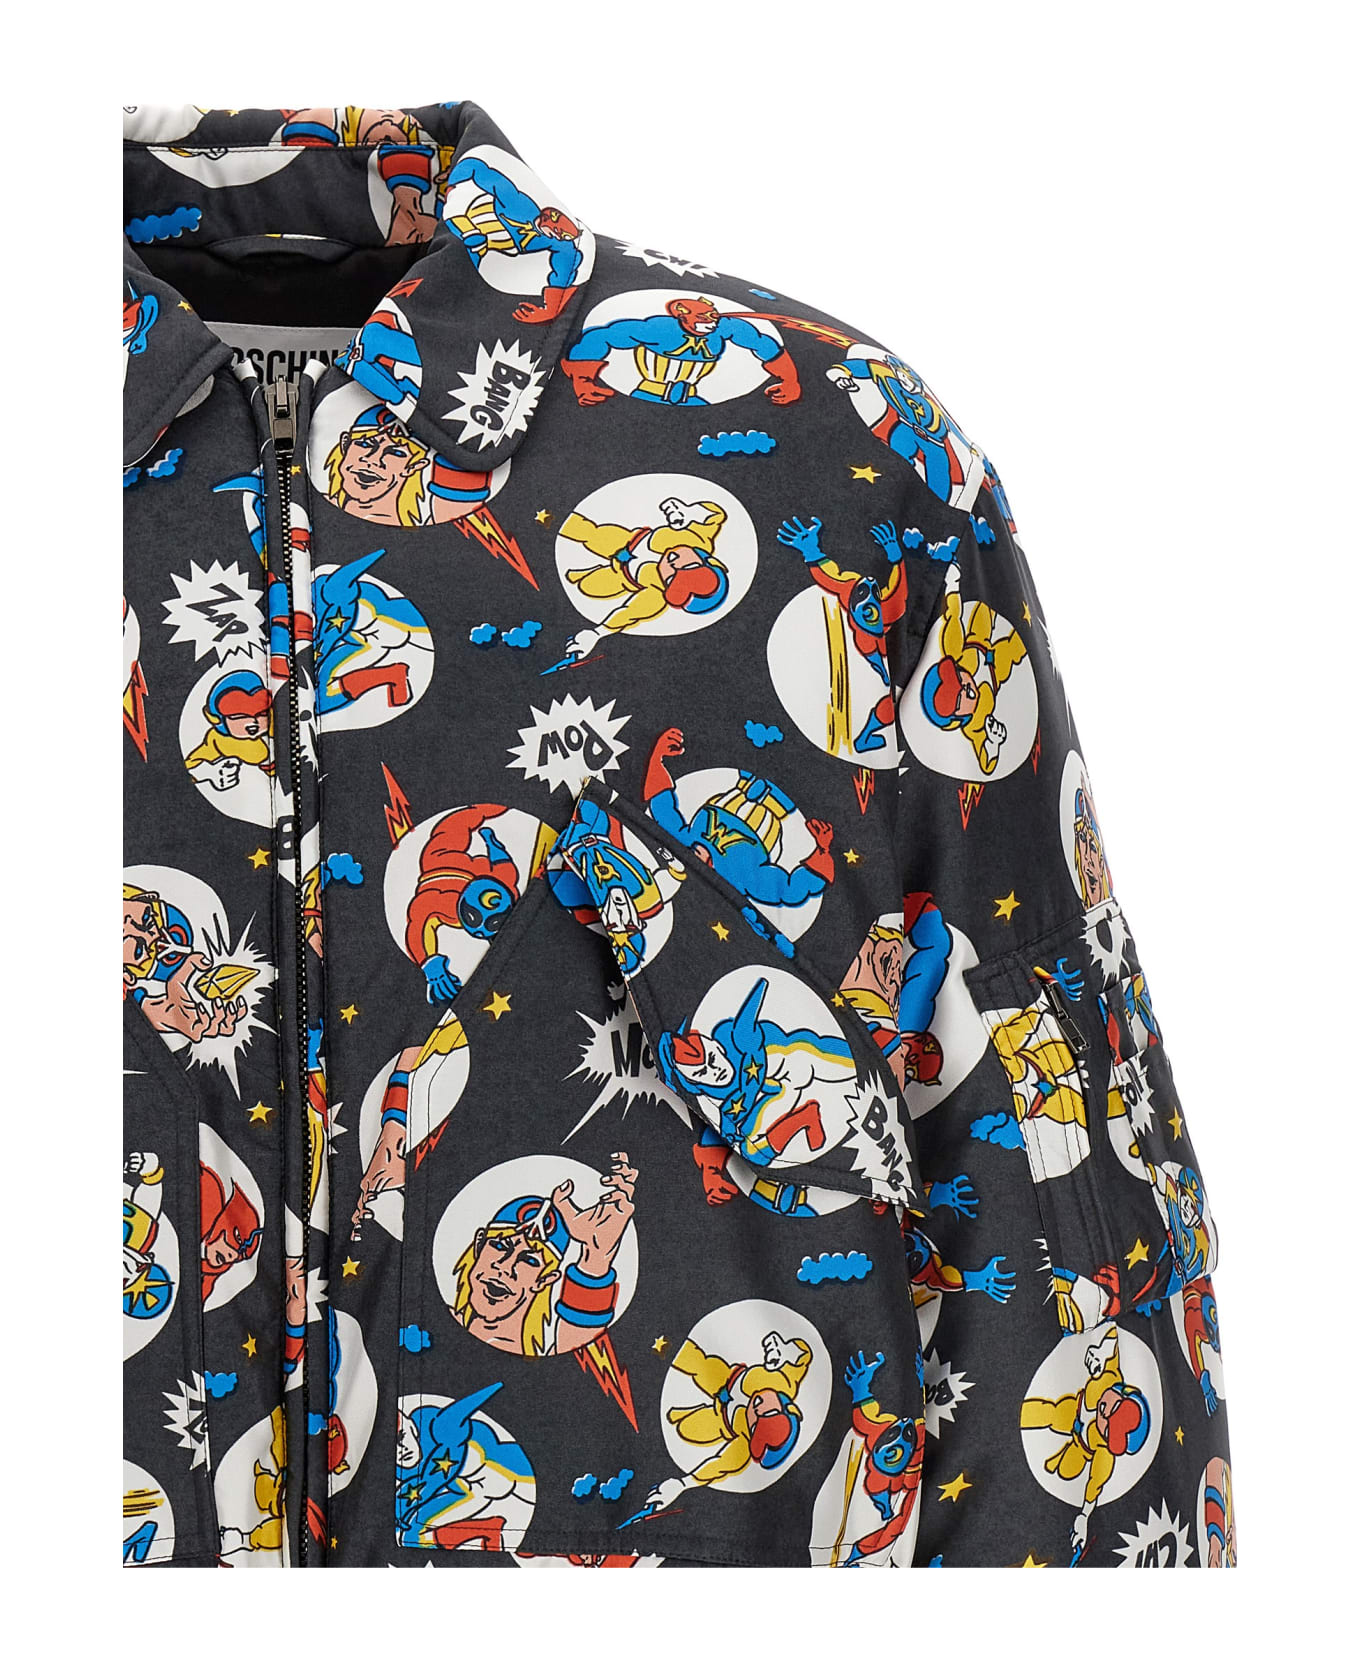 Moschino Fantasy Cartoon Bomber Jacket - Multicolor ジャケット